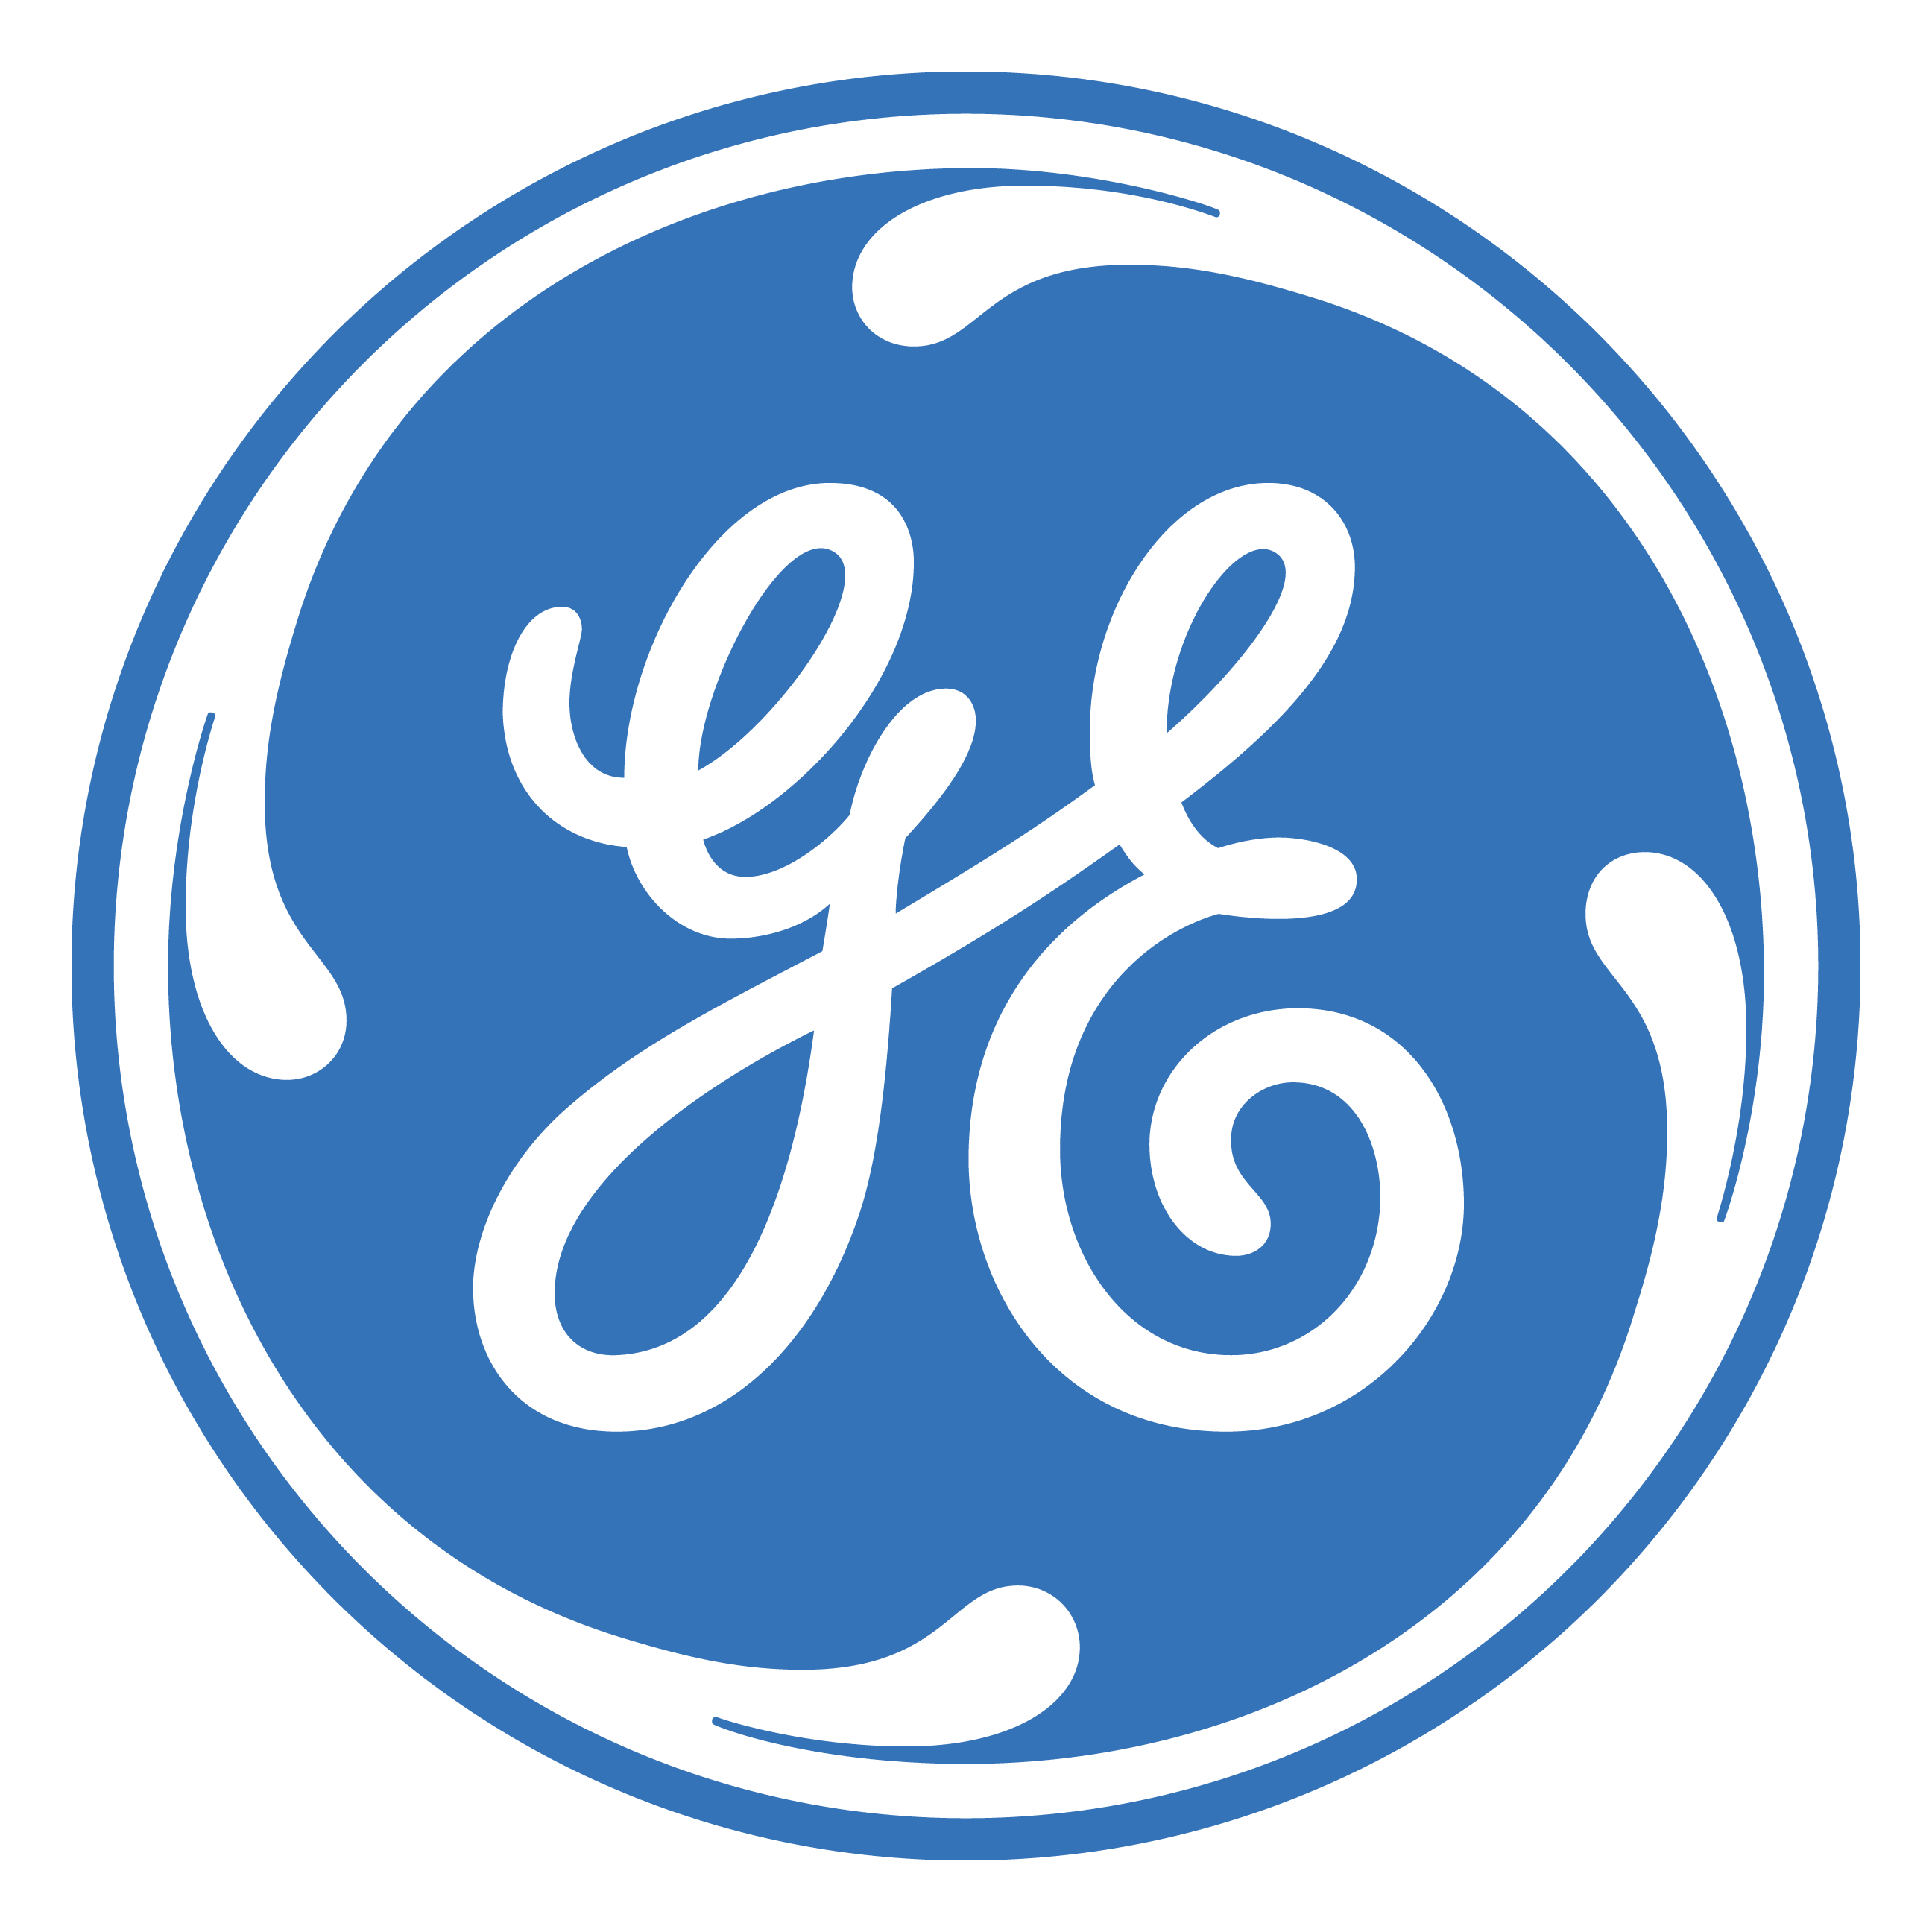 GE Logo PNG Image - PurePNG | Free transparent CC0 PNG Image Library